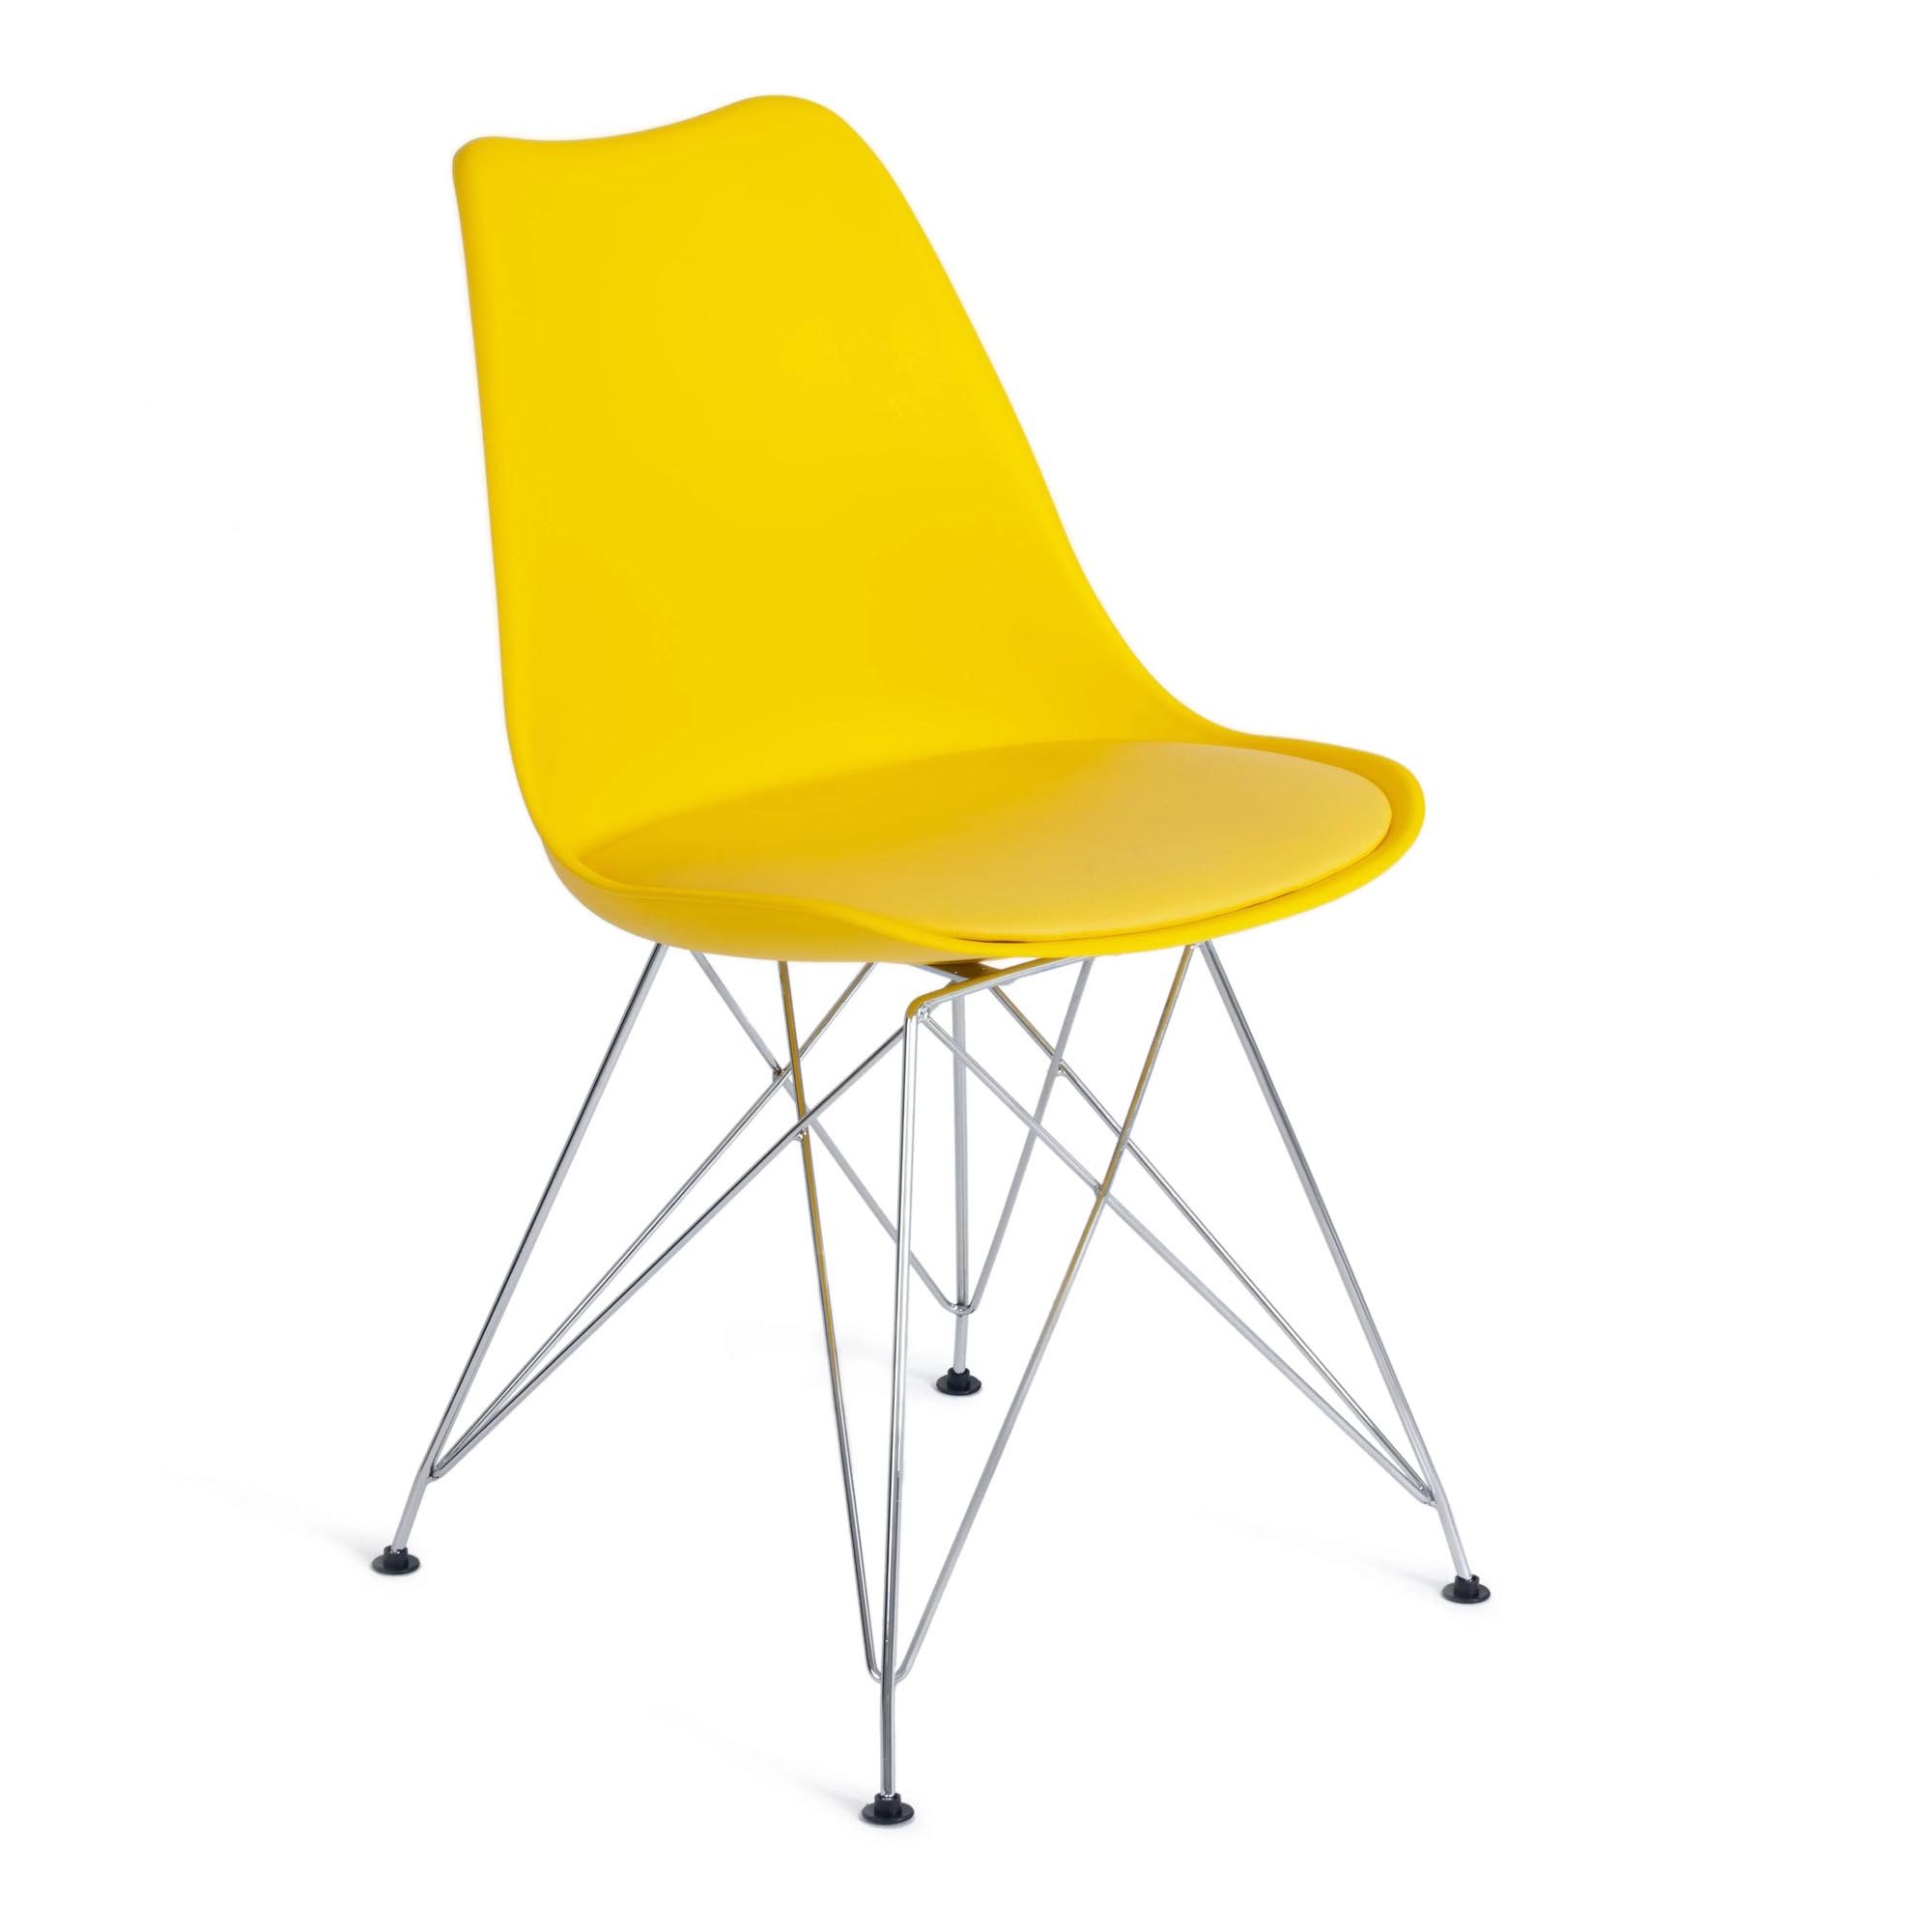 Стул TC Tulip Iron Chair 54,5x48x83,5 см желтый nordic dining chair wrought iron chairs modern backrest study desk chaise bedroom home стул sillas de comedor стулья для кухни